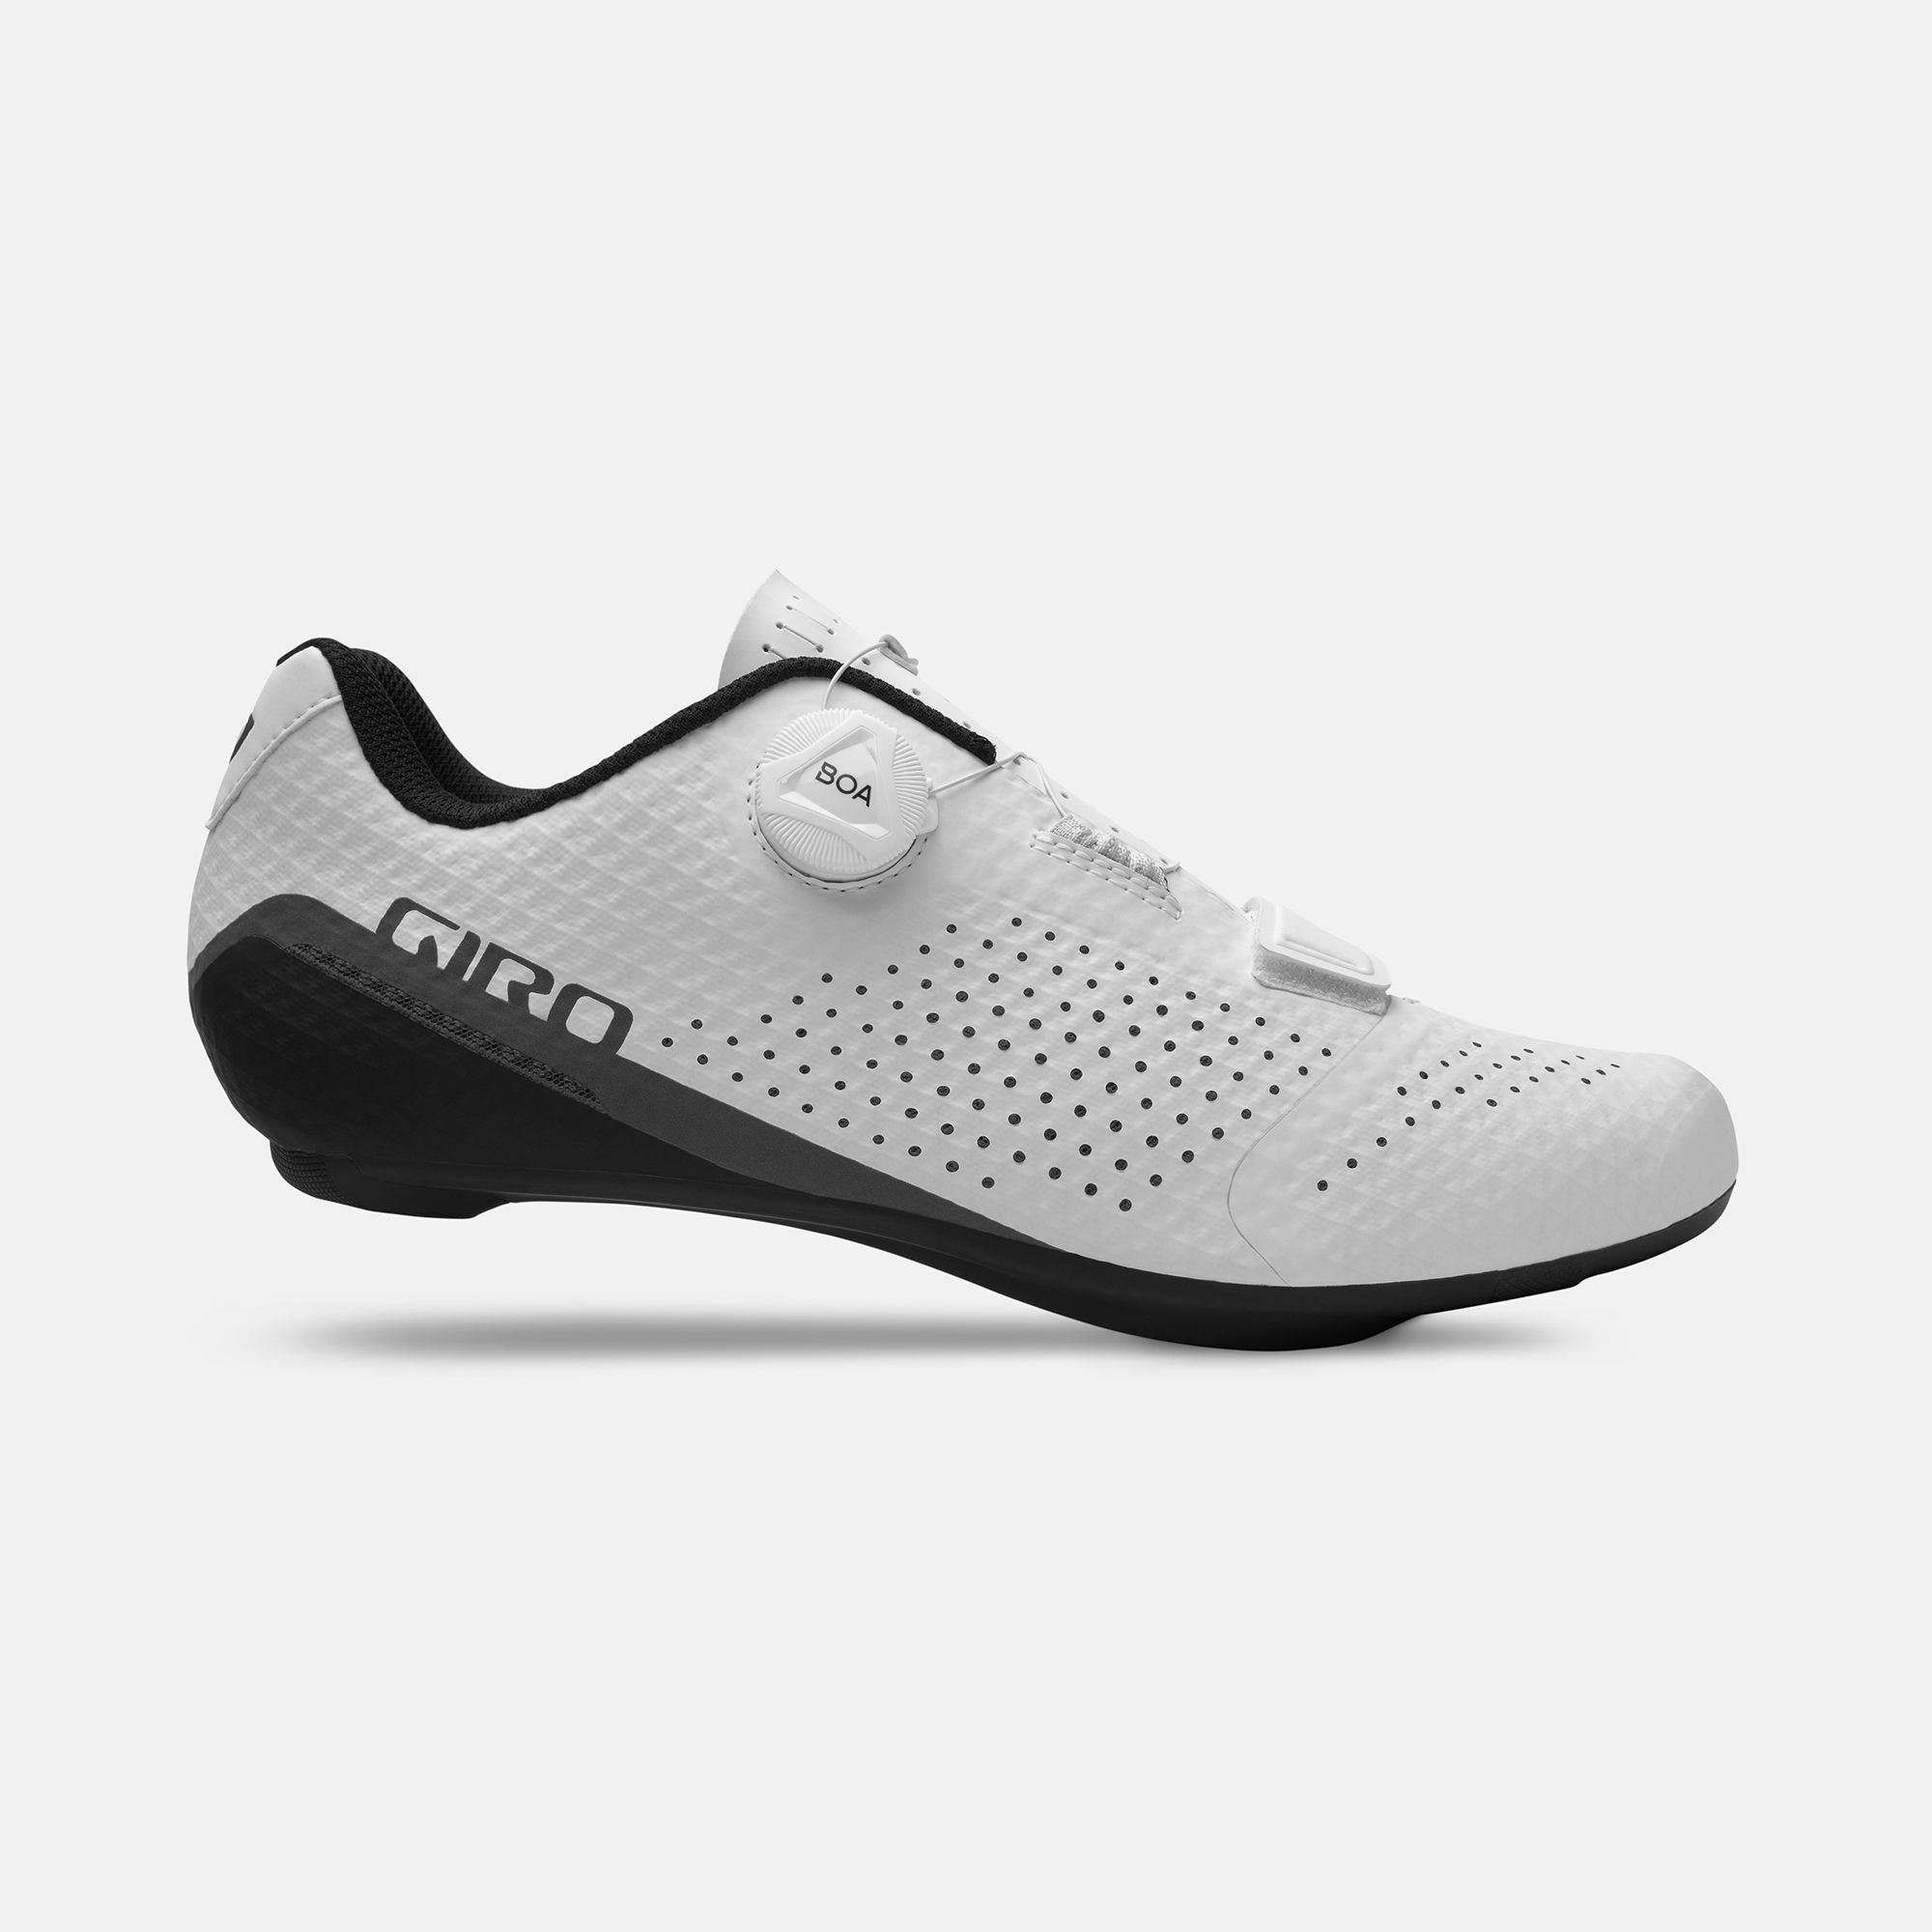 Details about   Giro Bike Shoes Civila Black Breathable Odor Resistant Frauenspezifisch 